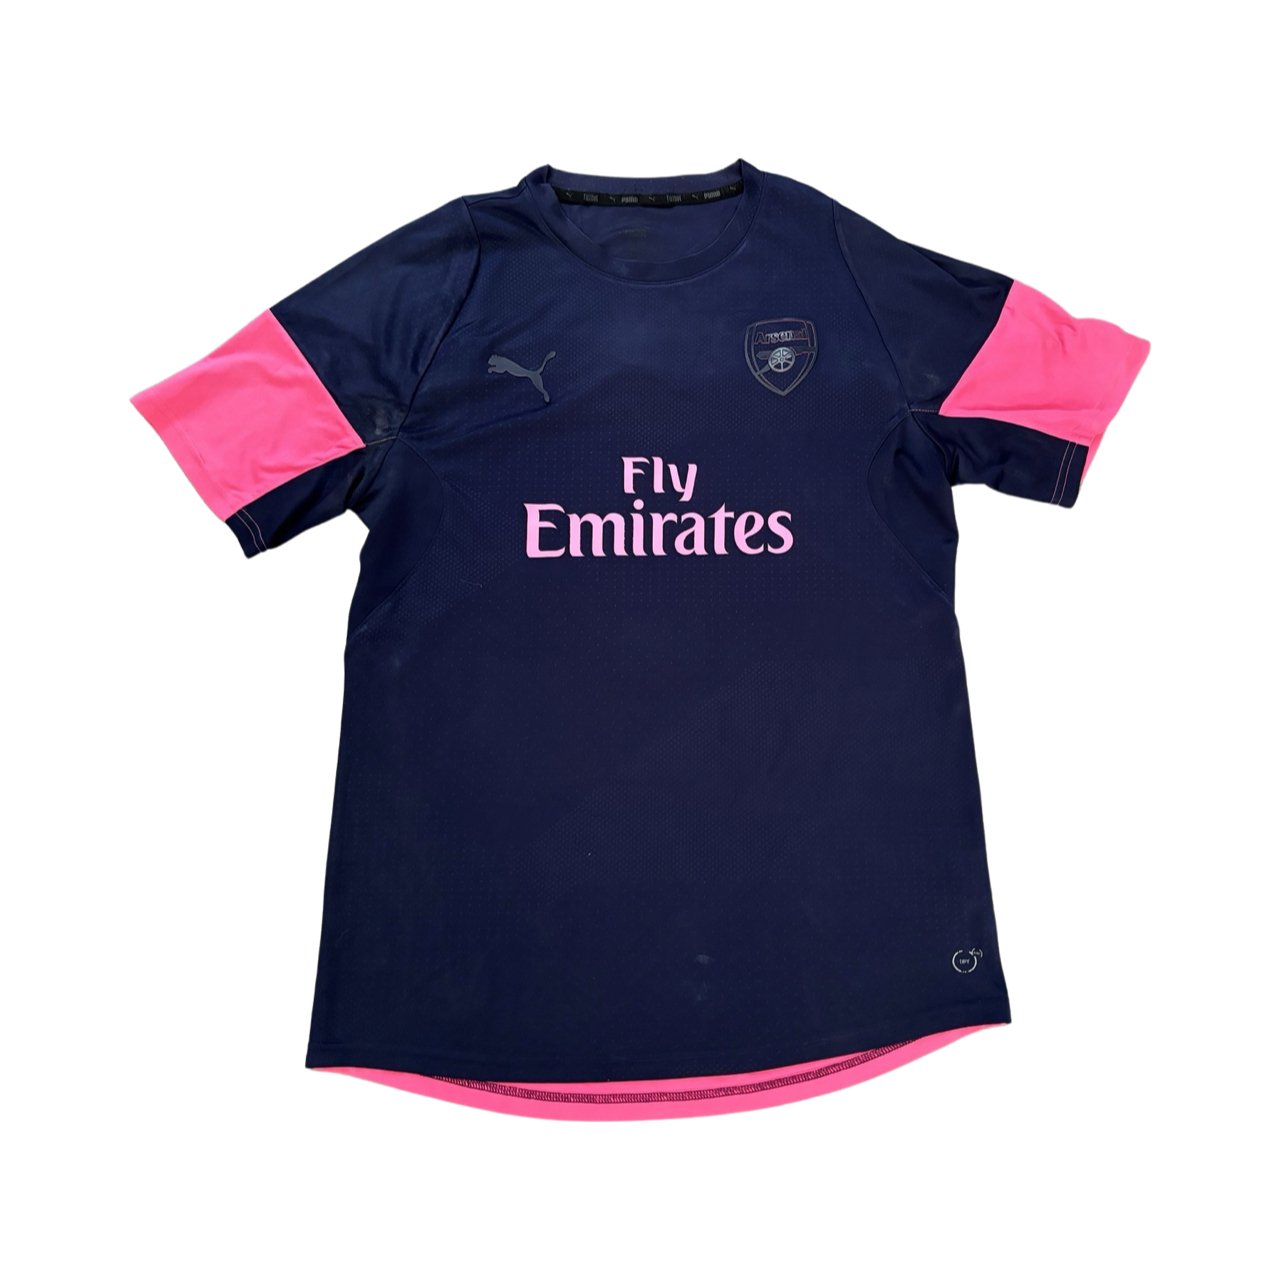 Arsenal FC Puma Fly Emirates Football Jersey - Preloved - Soul and Sense Streetwear